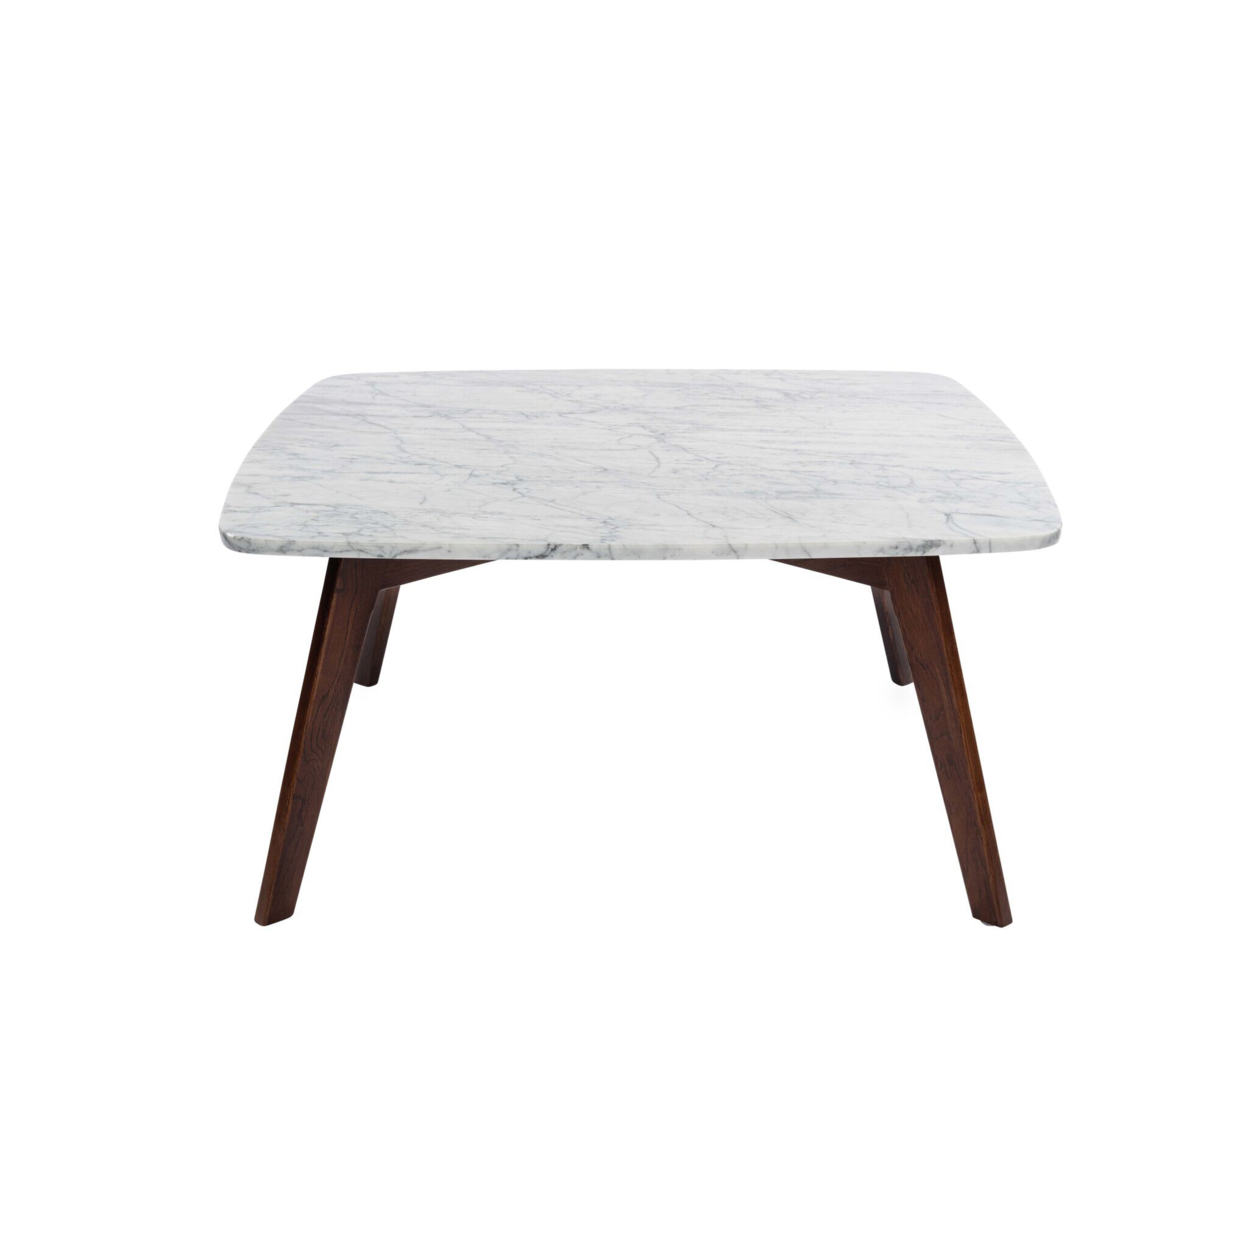 Vezzana 31" Square Italian Carrara White Marble Coffee Table with Legs - walnut